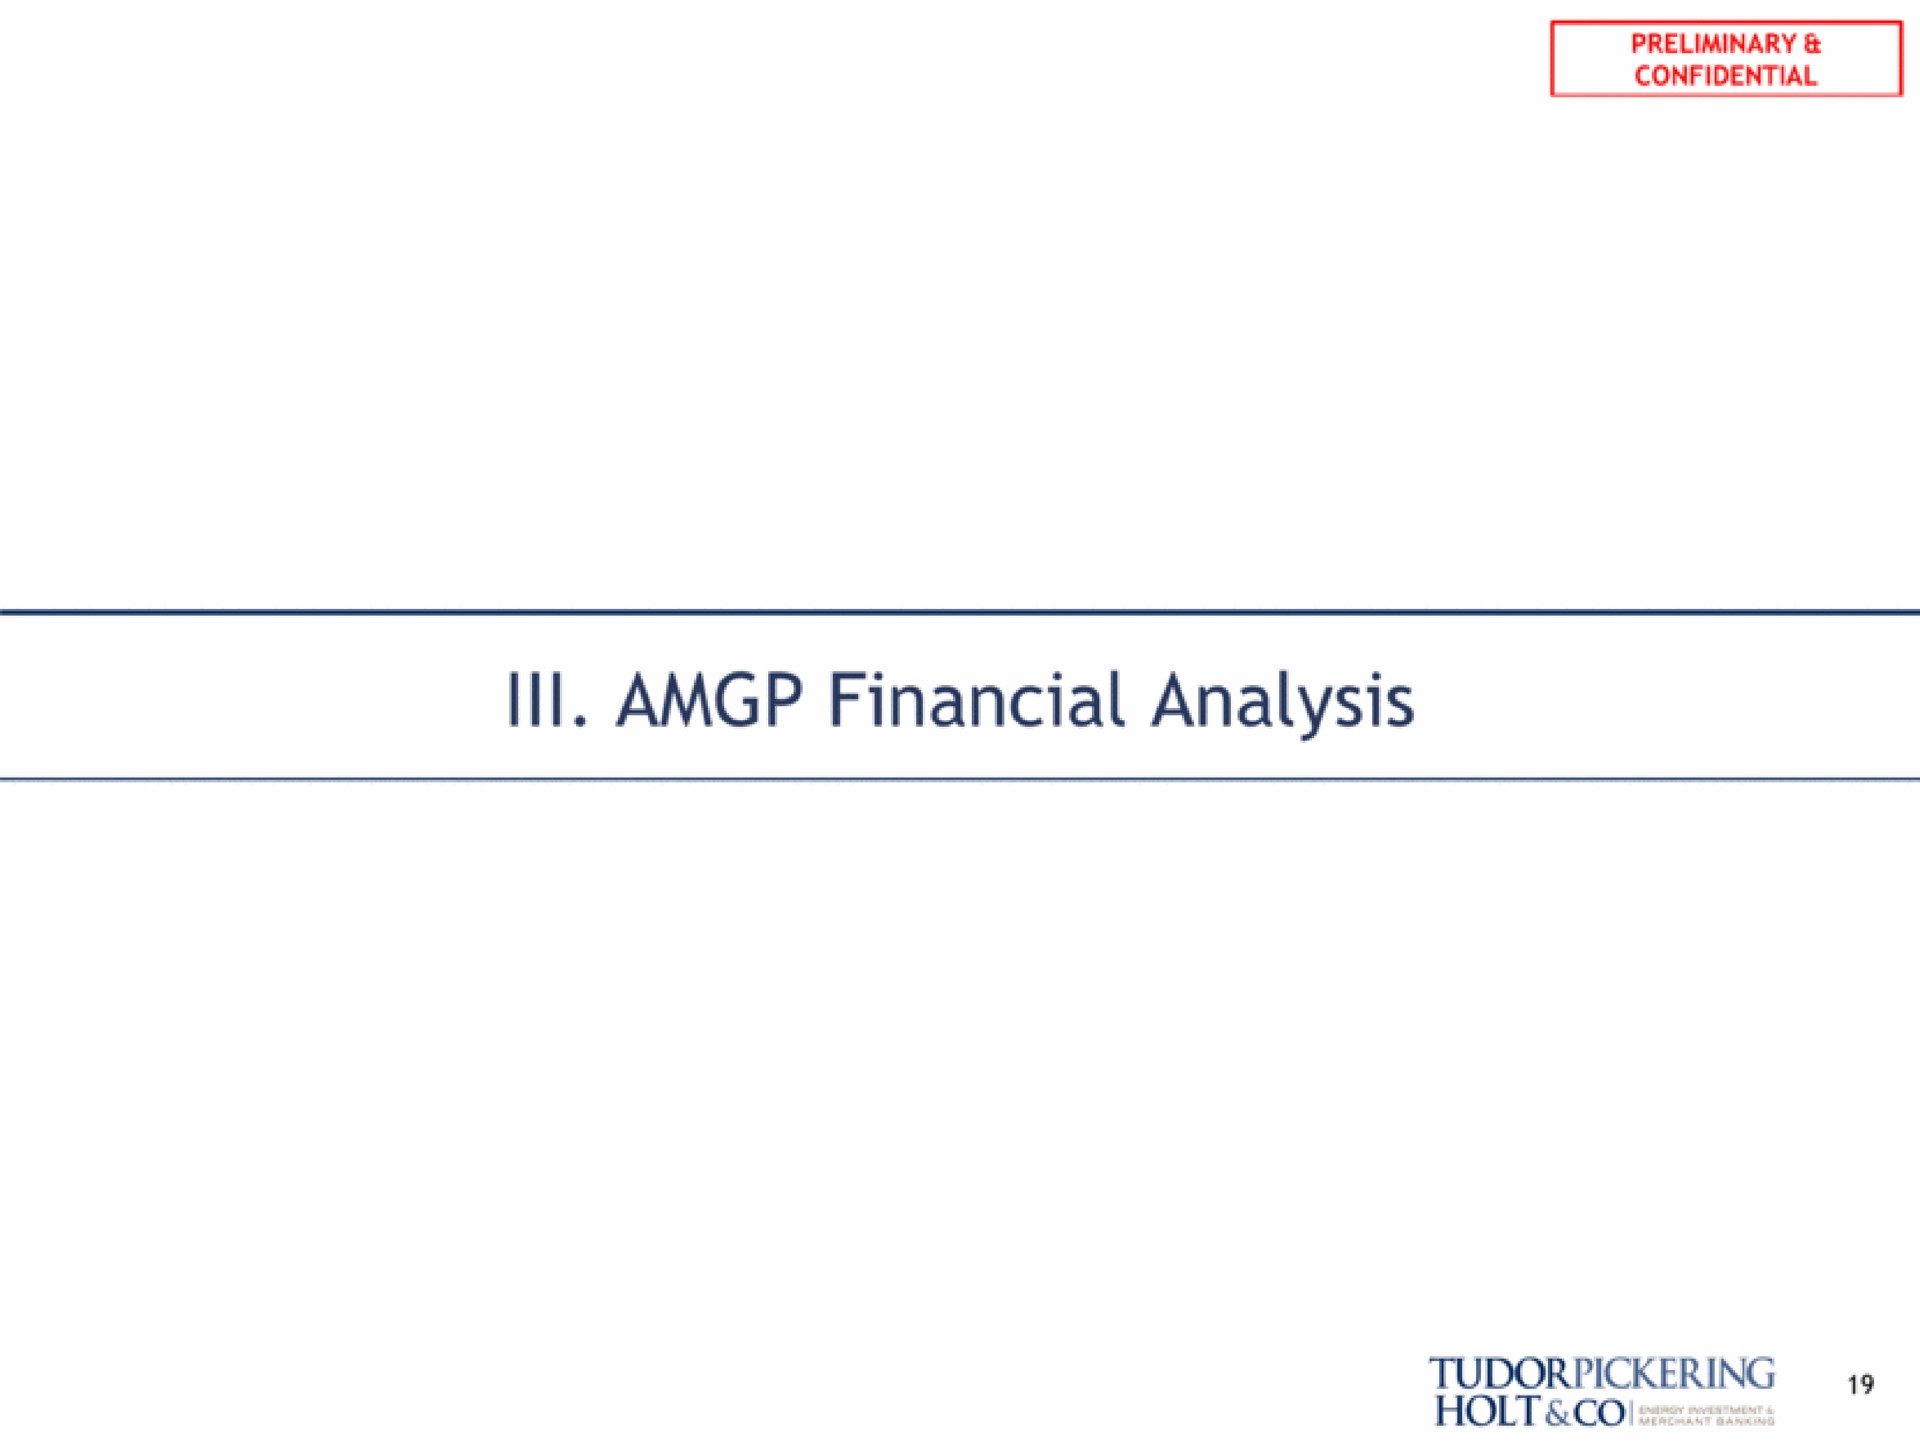 financial analysis holt | Tudor, Pickering, Holt & Co